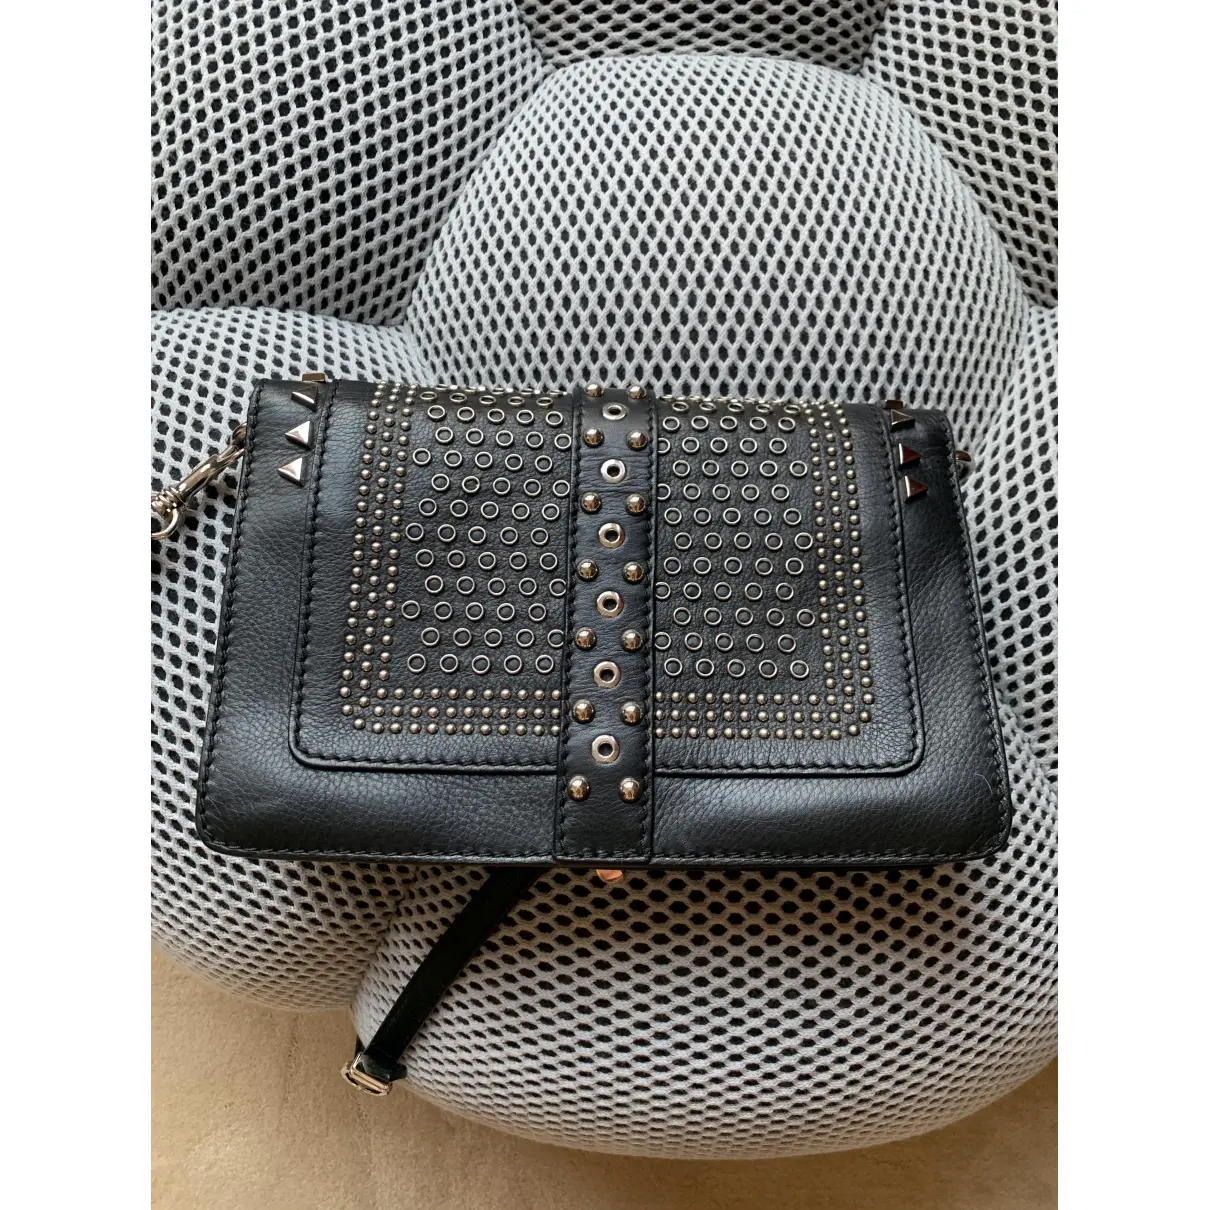 Buy Barbara Bui Leather crossbody bag online